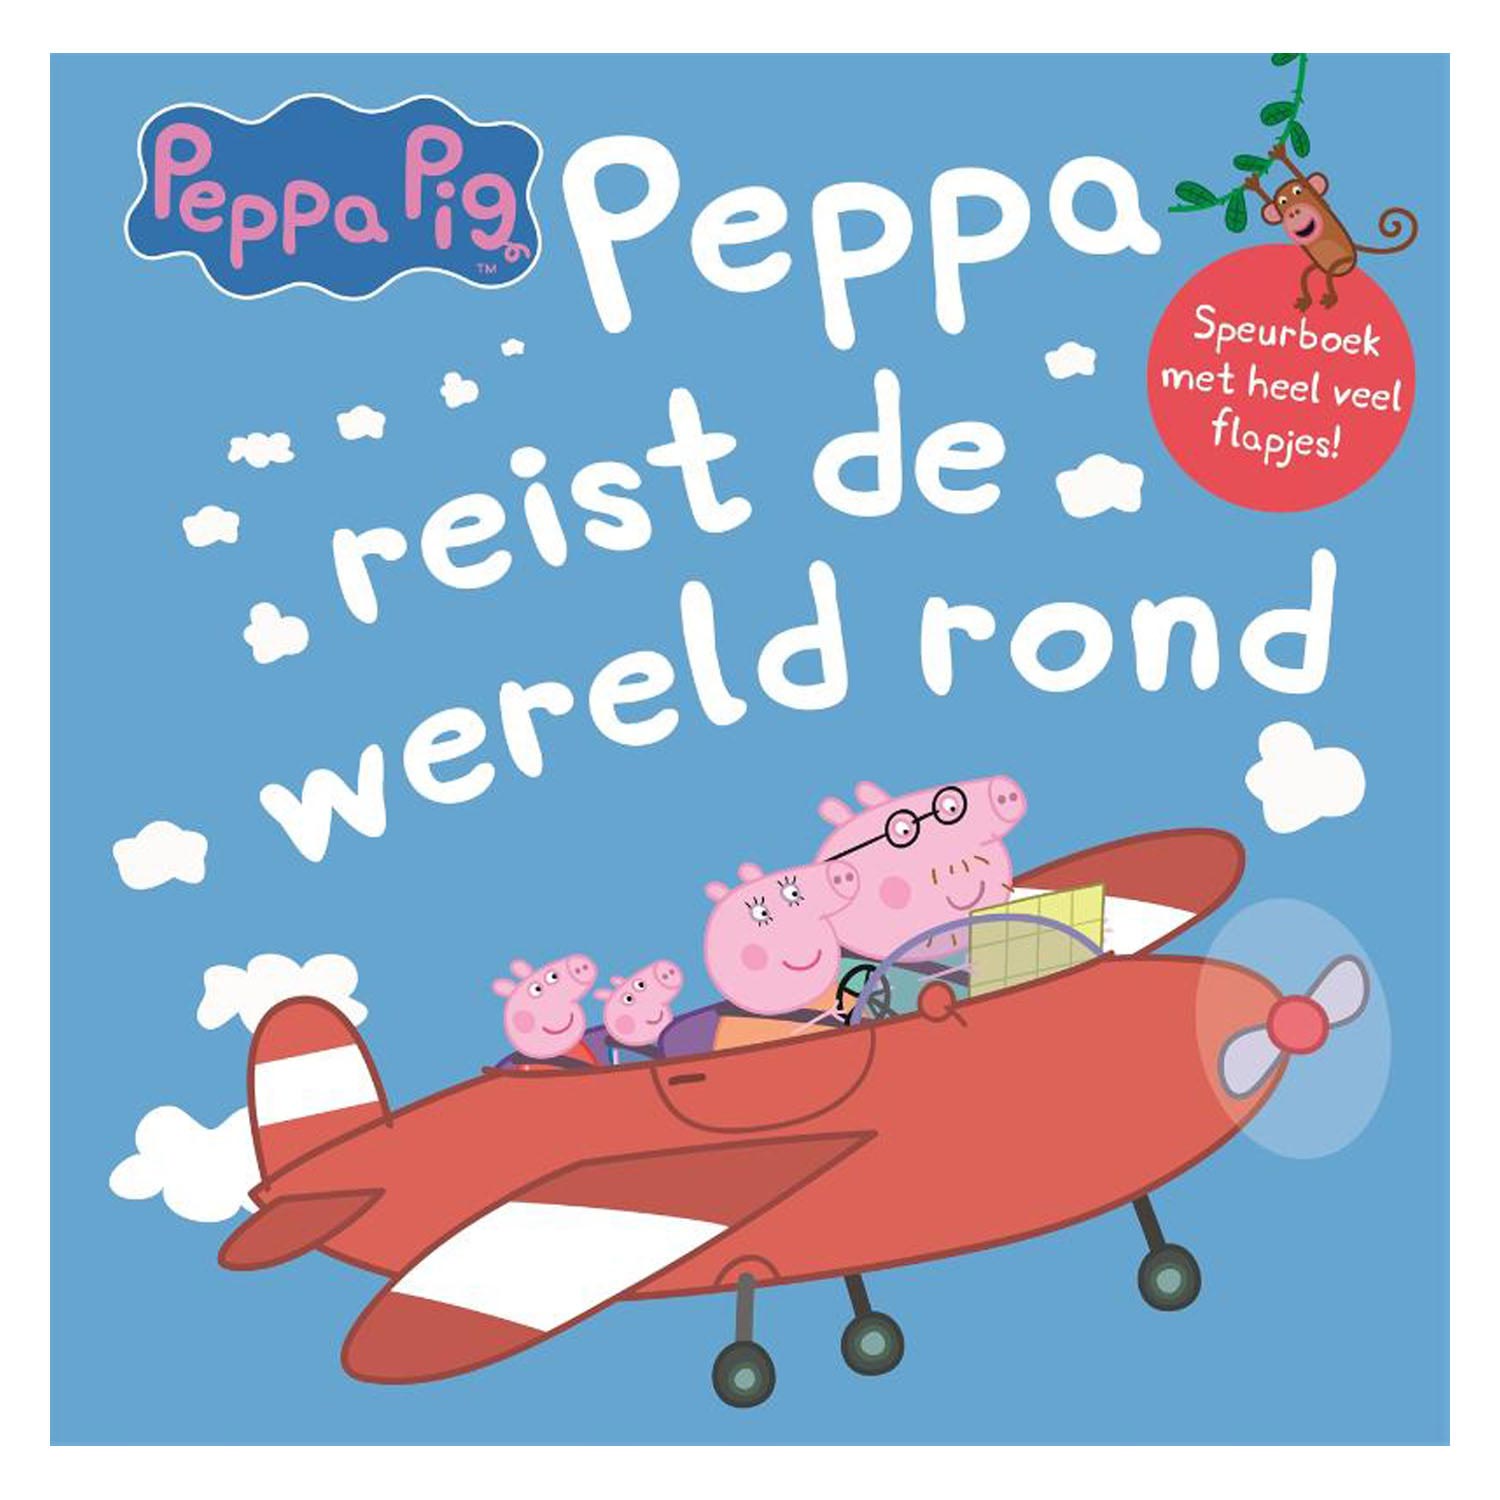 Peppa Pig - Peppa reist de wereld rond